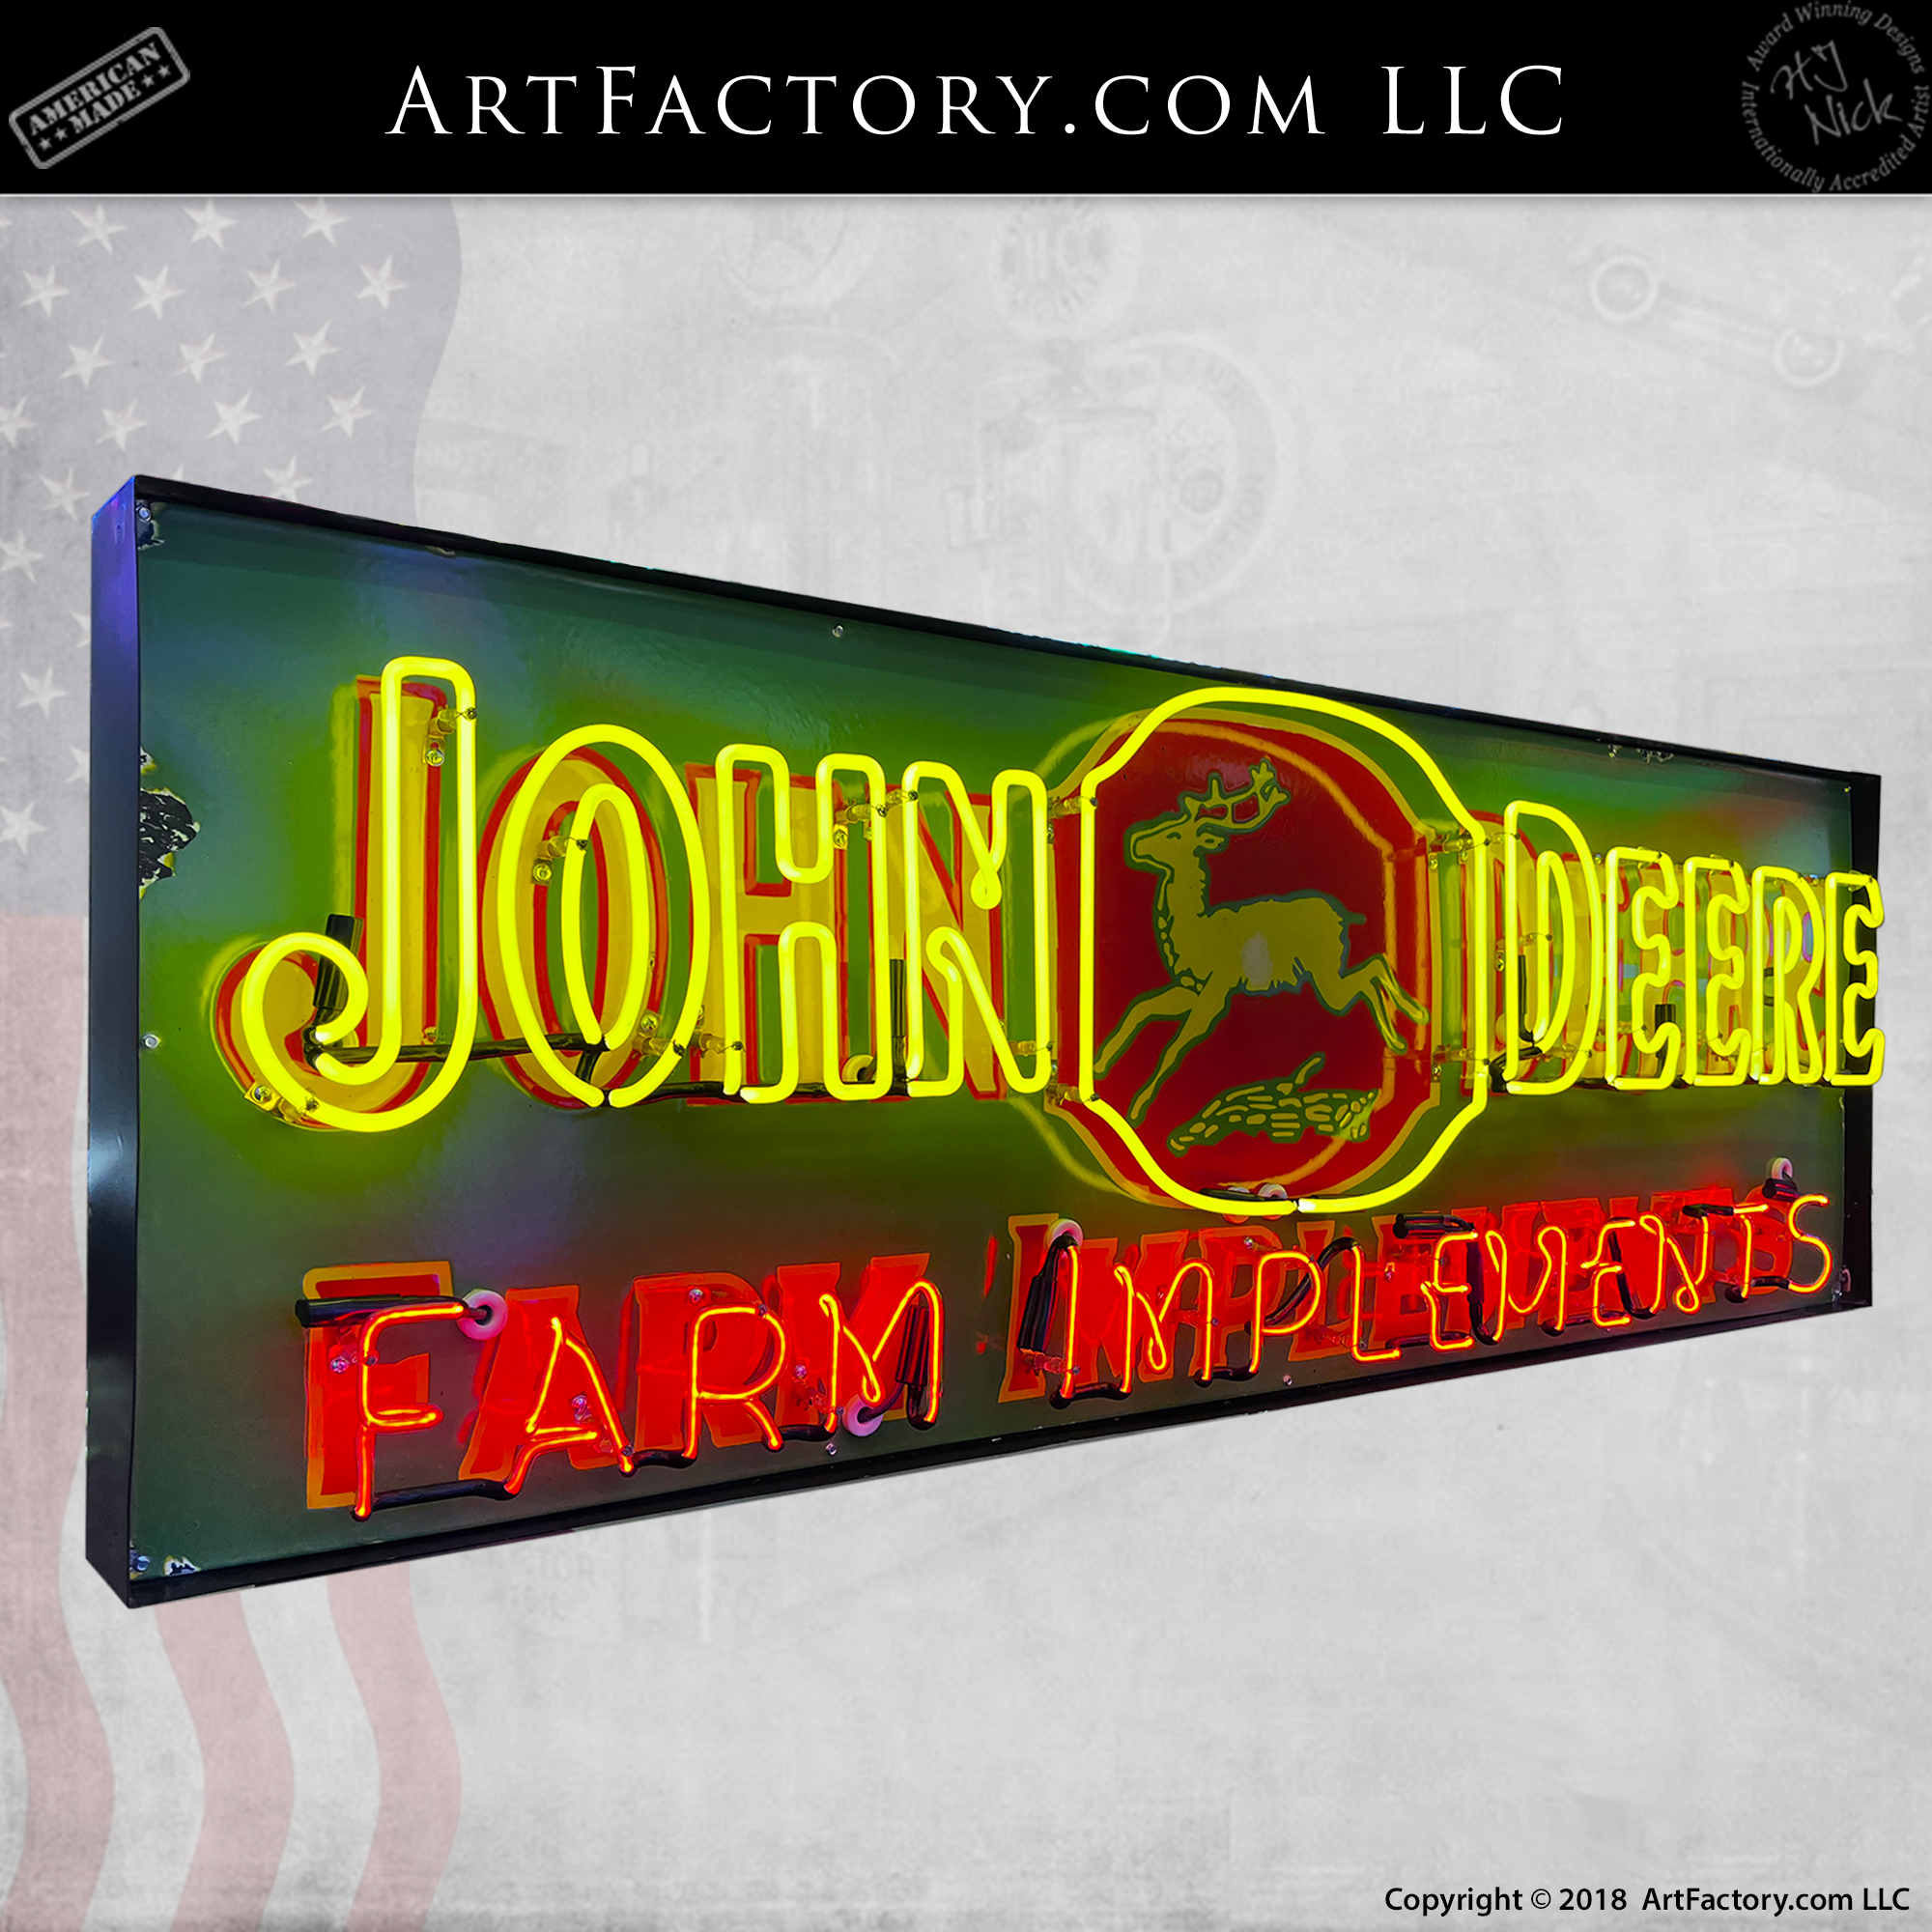 New John Deere Farm Implements Neon Sign